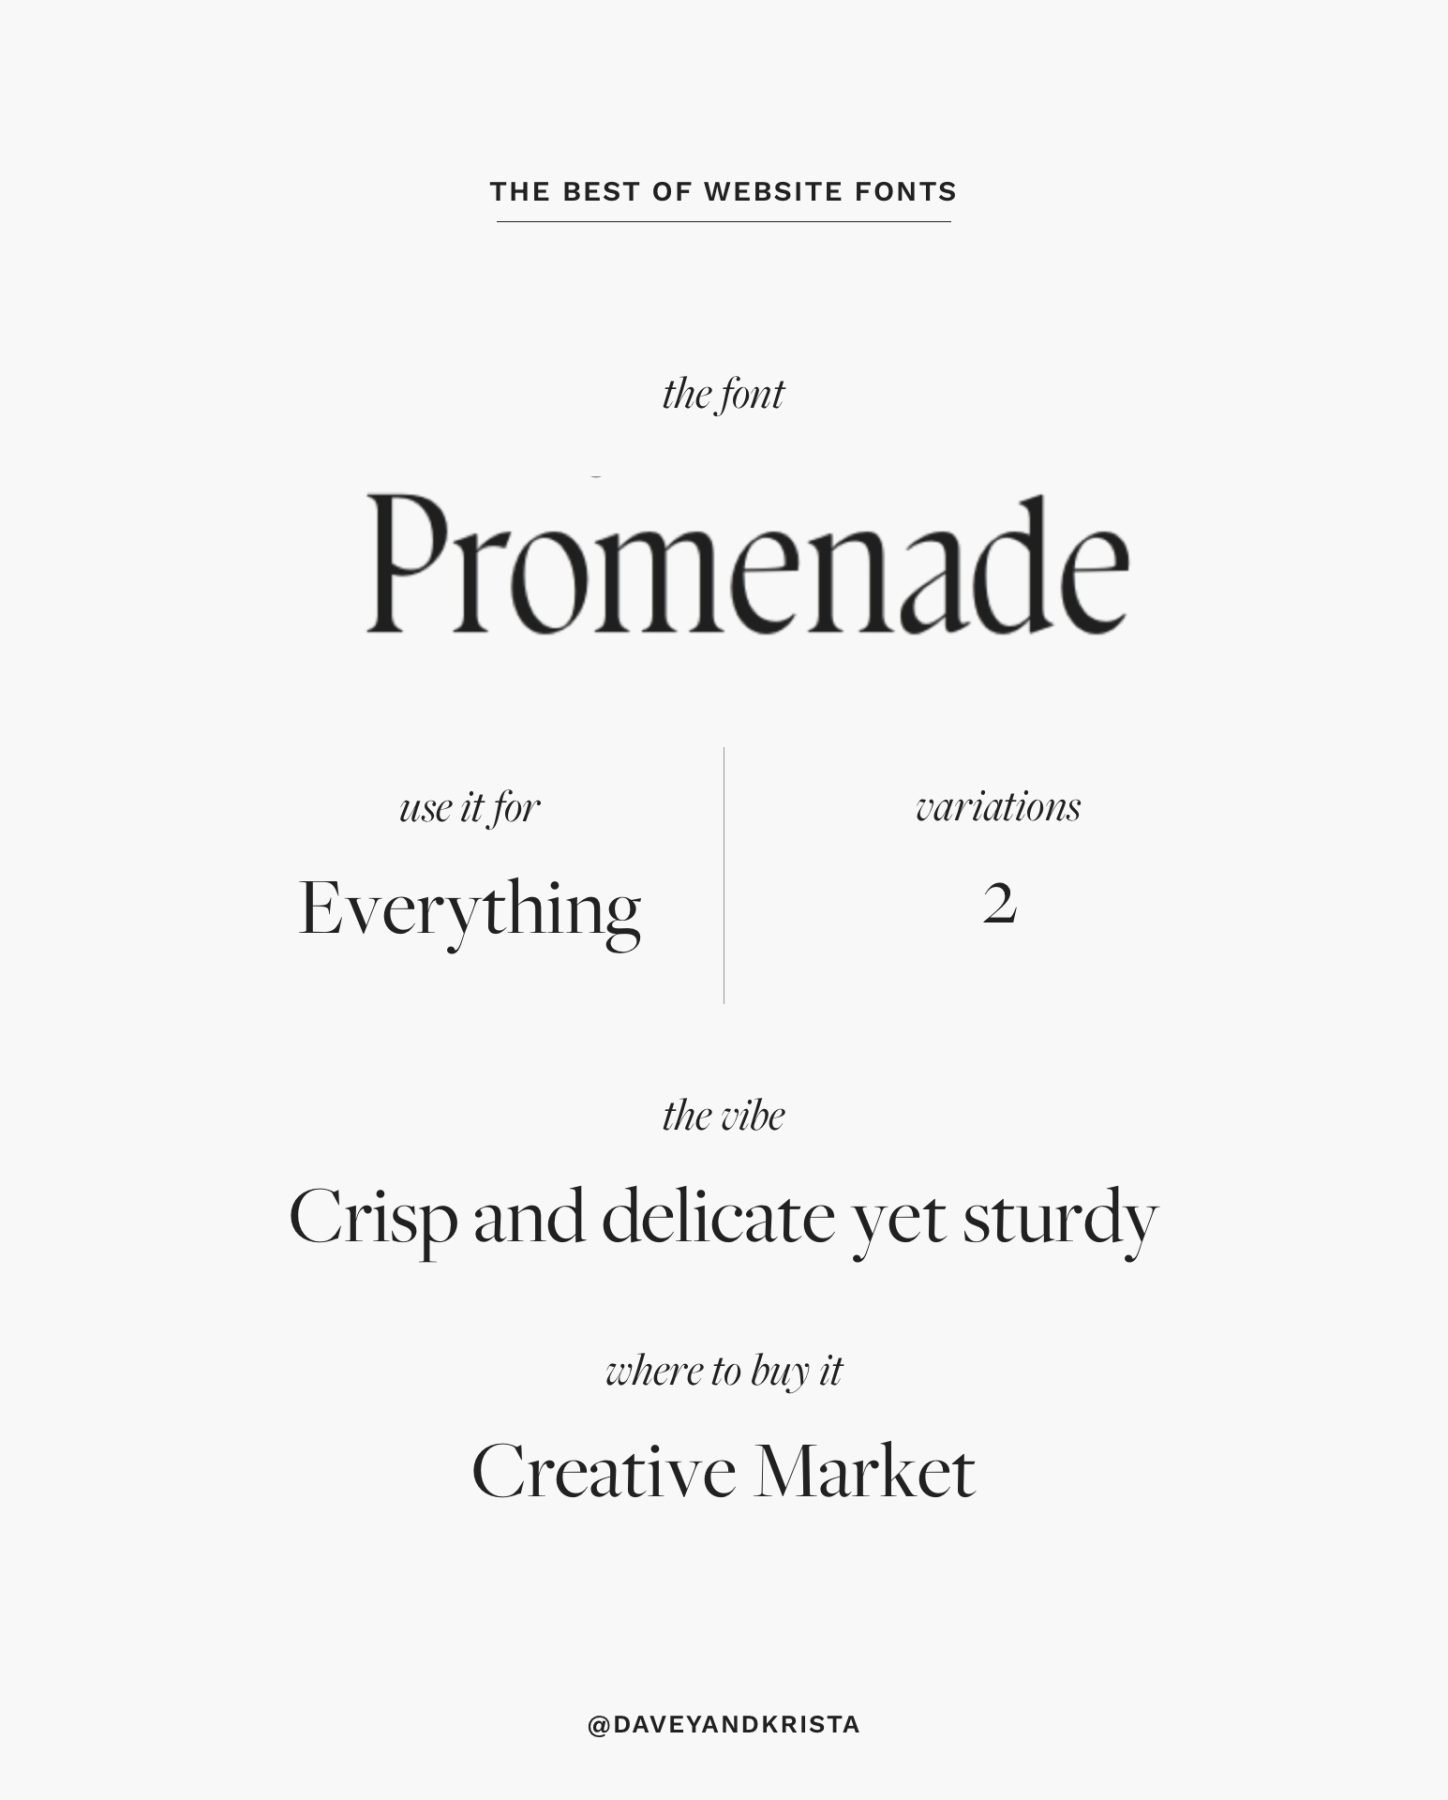 Promenade - a crisp yet study font for website headlines. | The Best Fonts for Websites